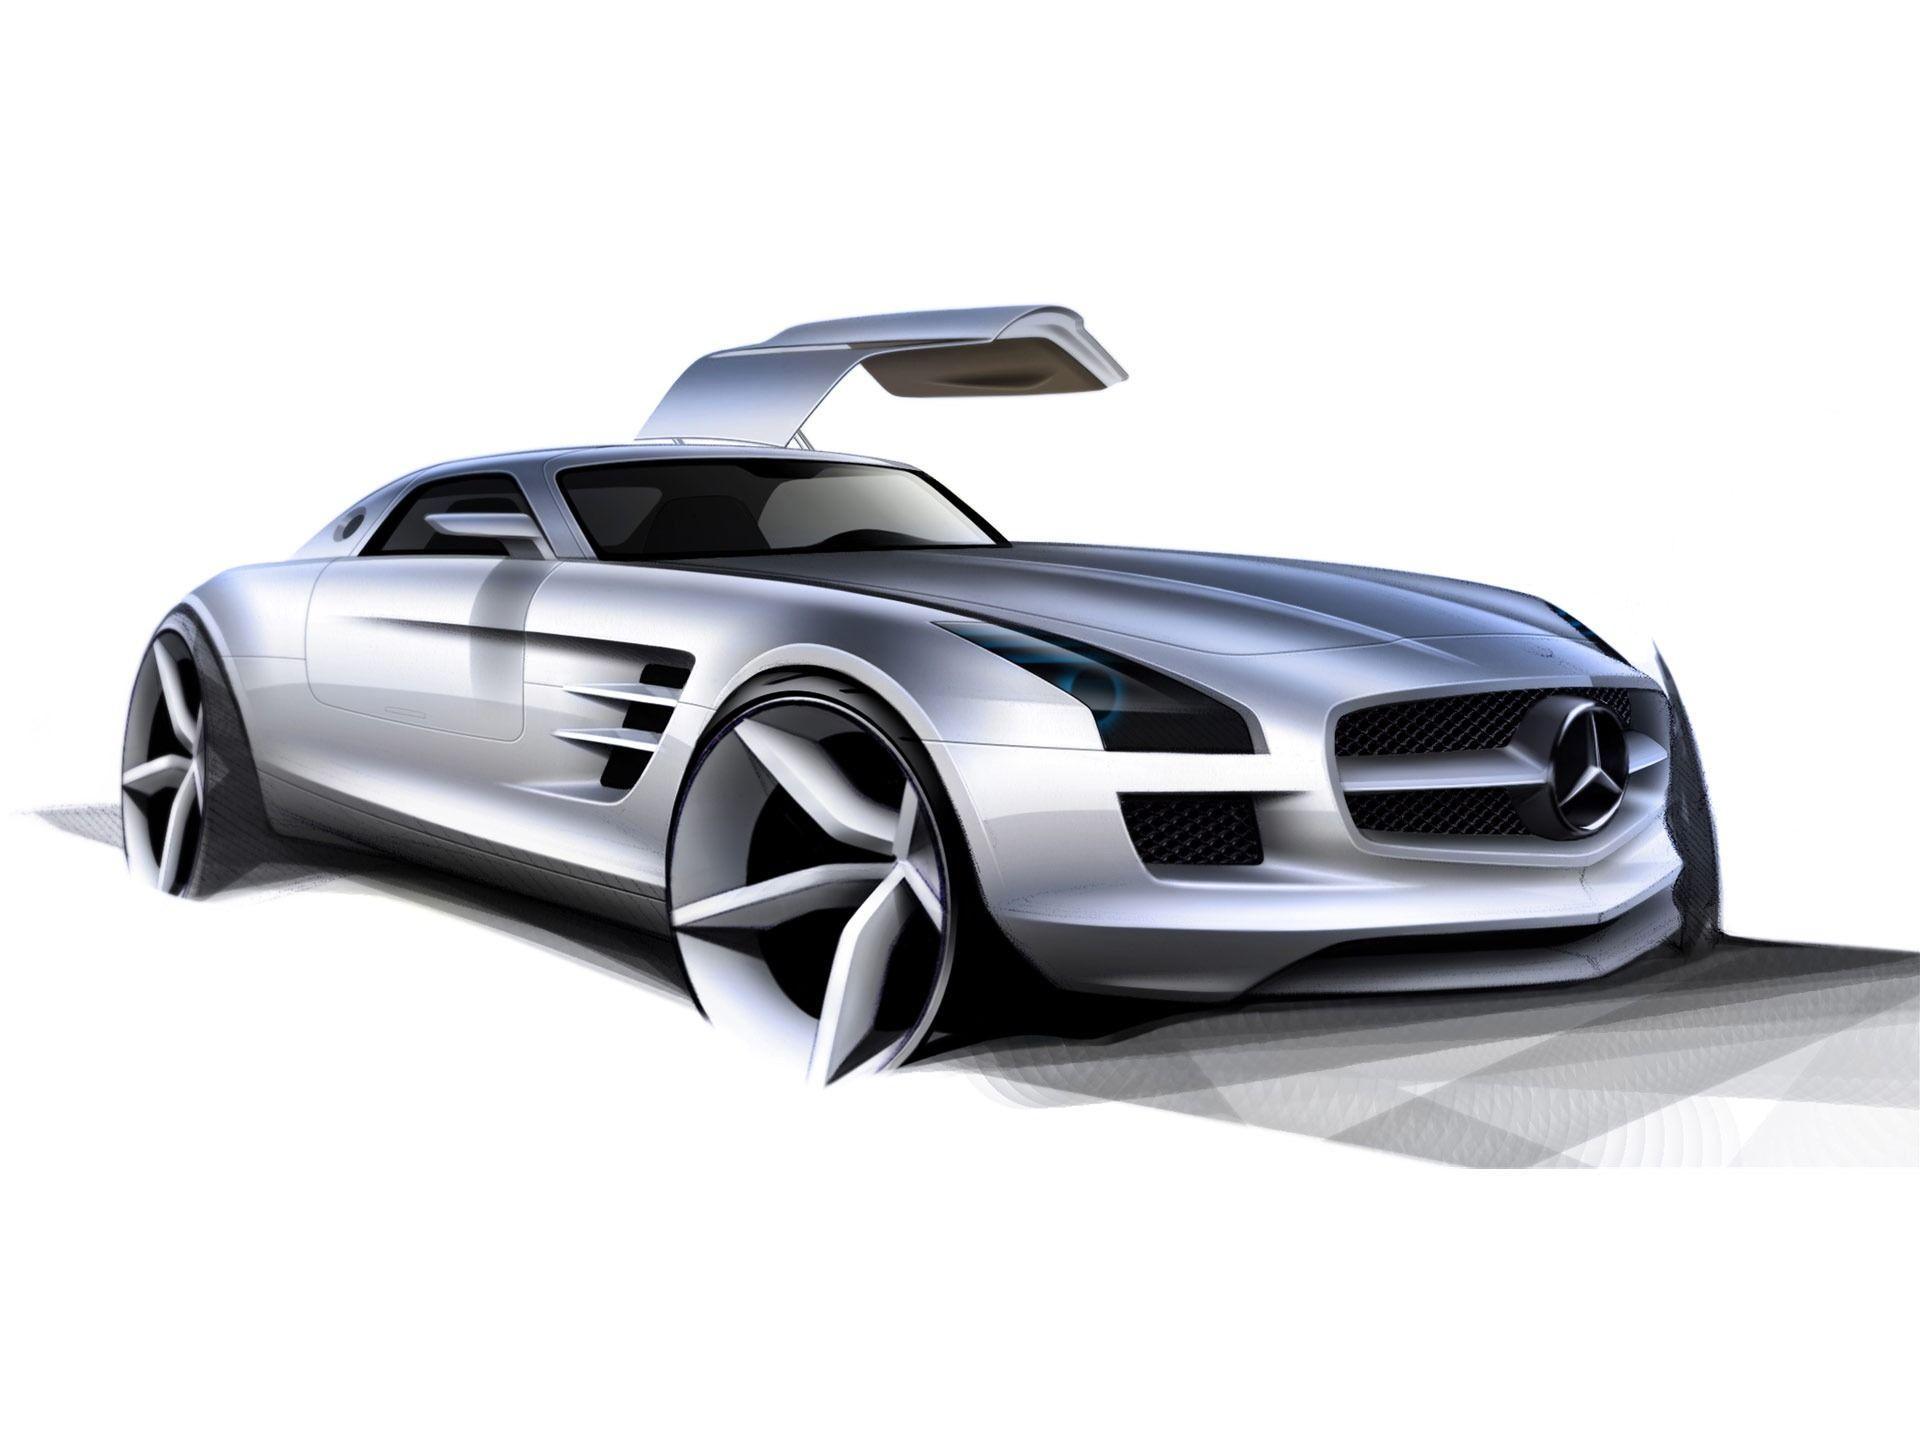 Mercedes Benz SLS AMG Wallpaper Concept Cars Wallpaper in jpg format for free download